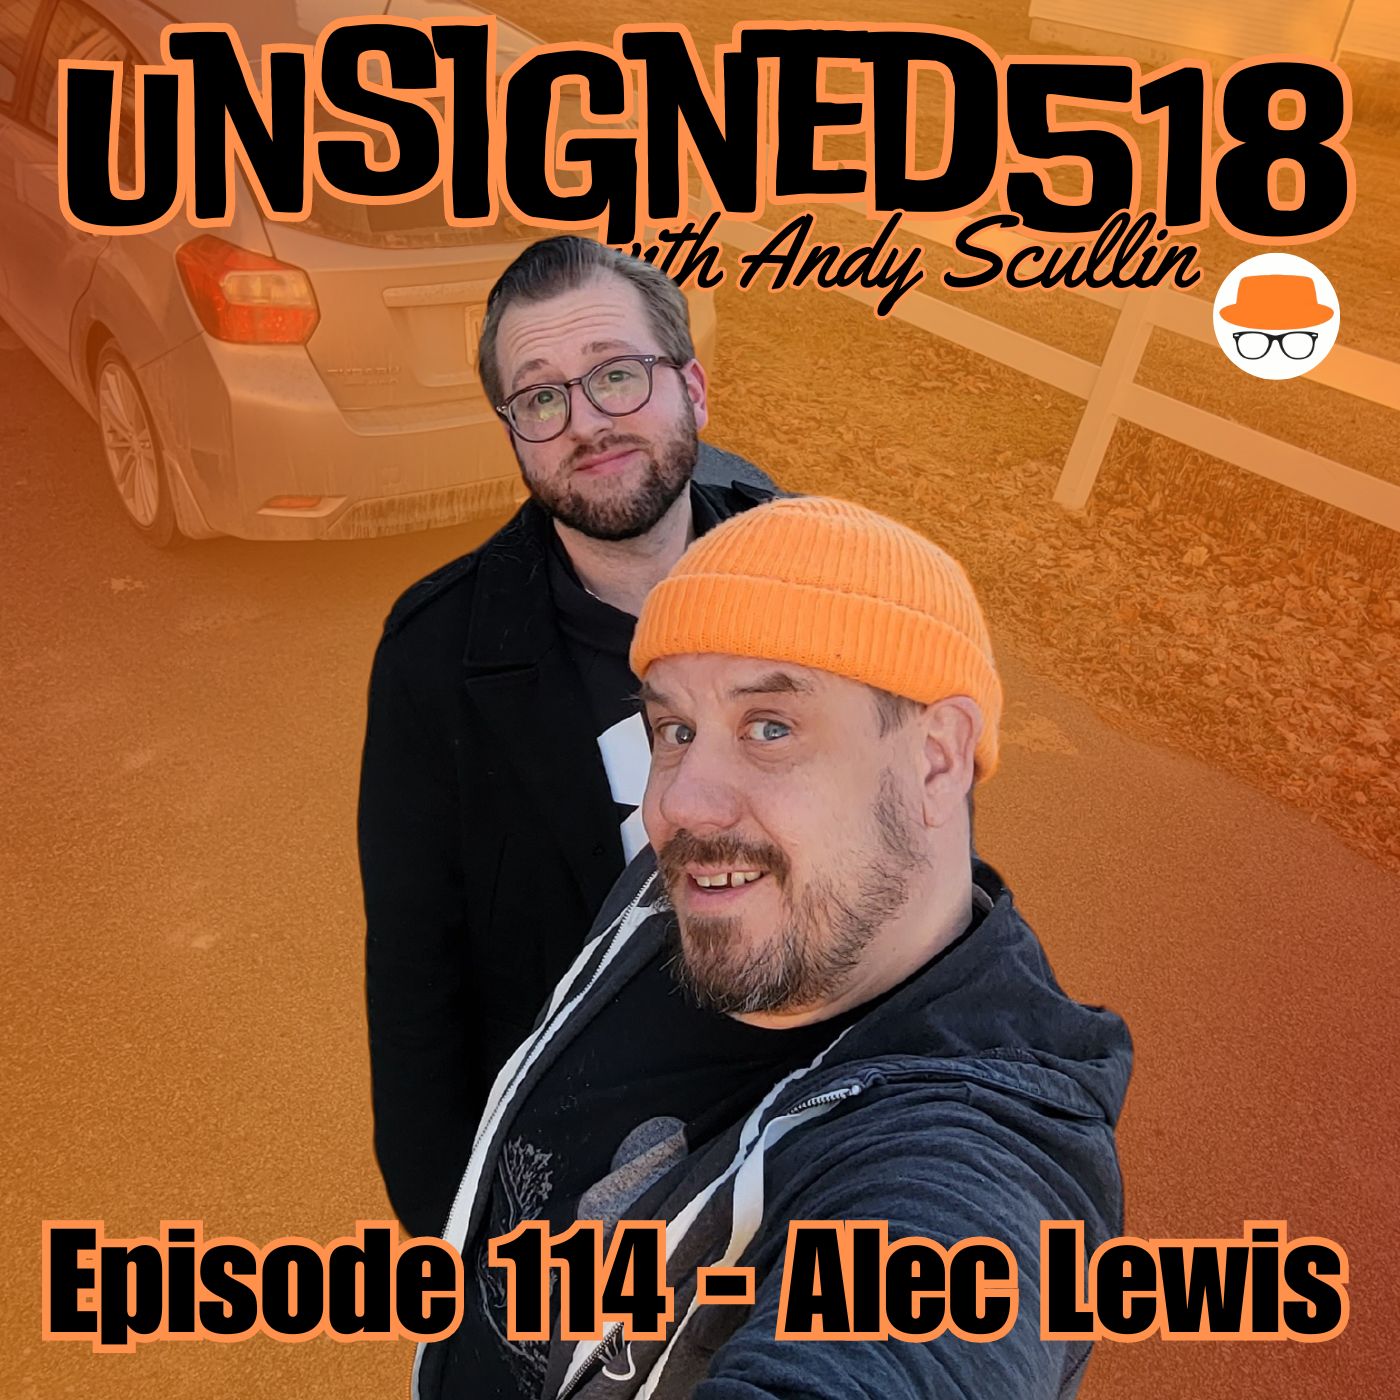 Unsigned518 - Episode 114 - Alec Lewis